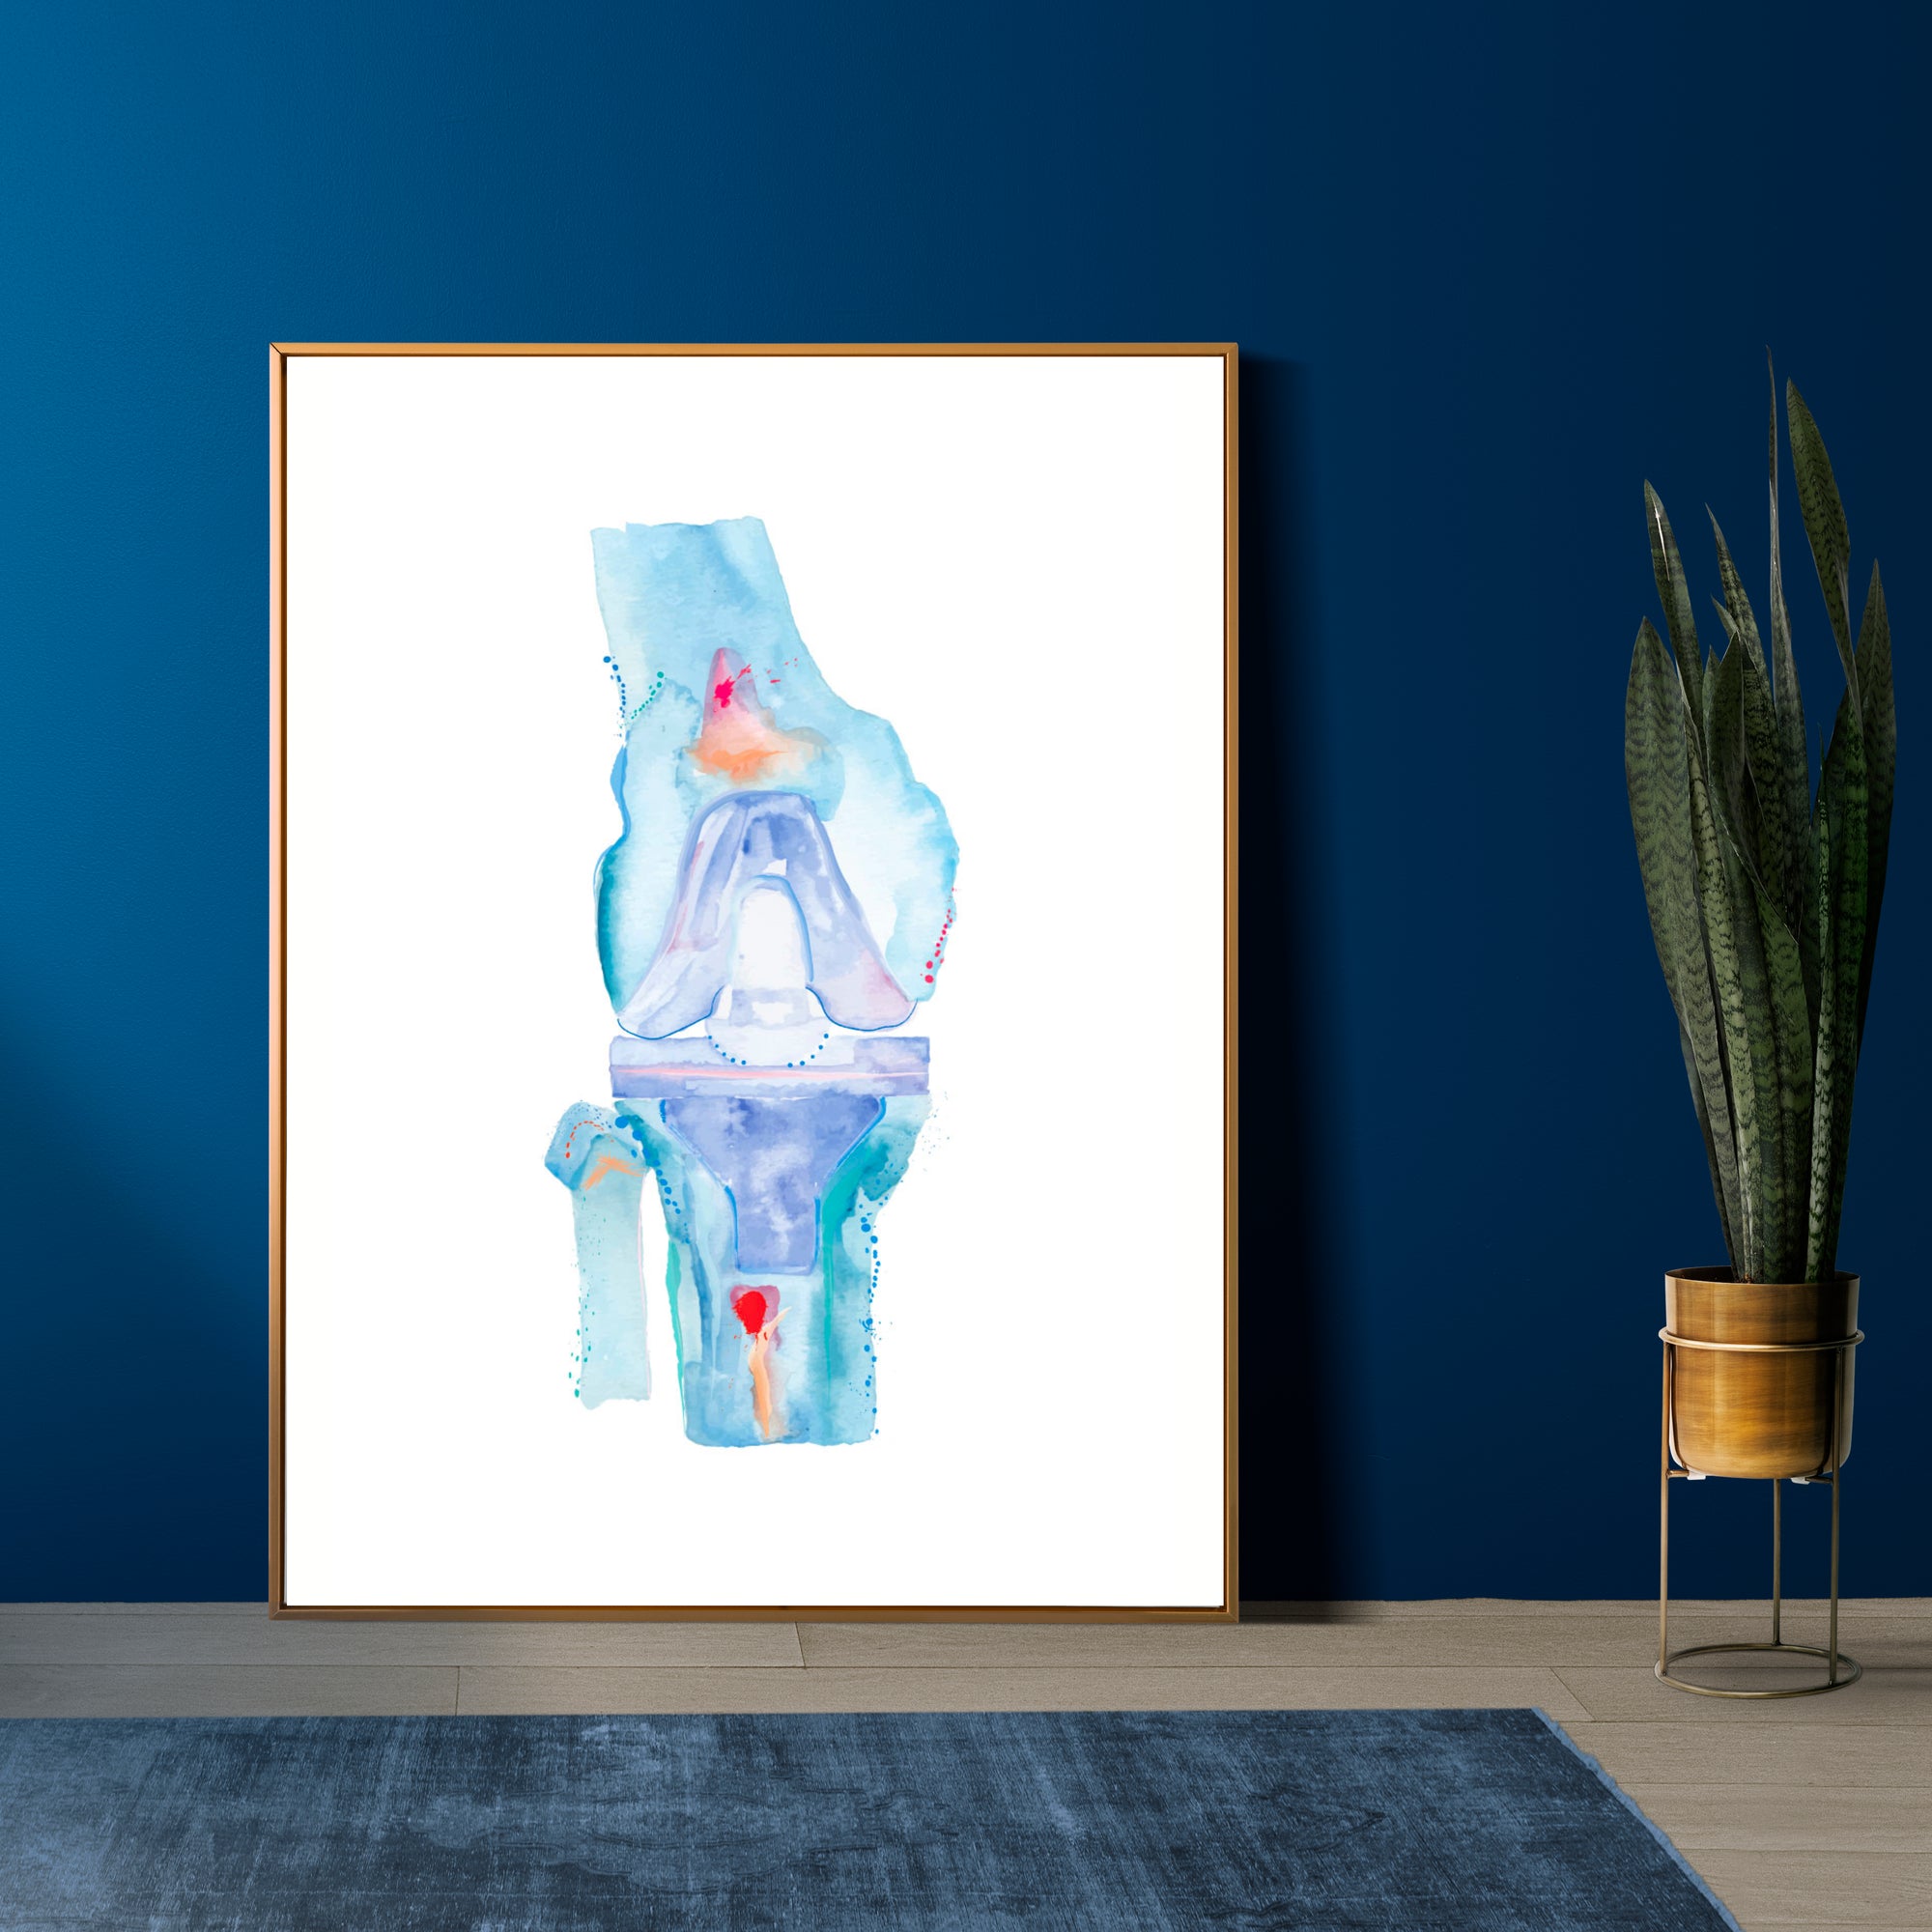 Knee Replacement Surgery Art Print, Orthopedic Surgery Wall Art